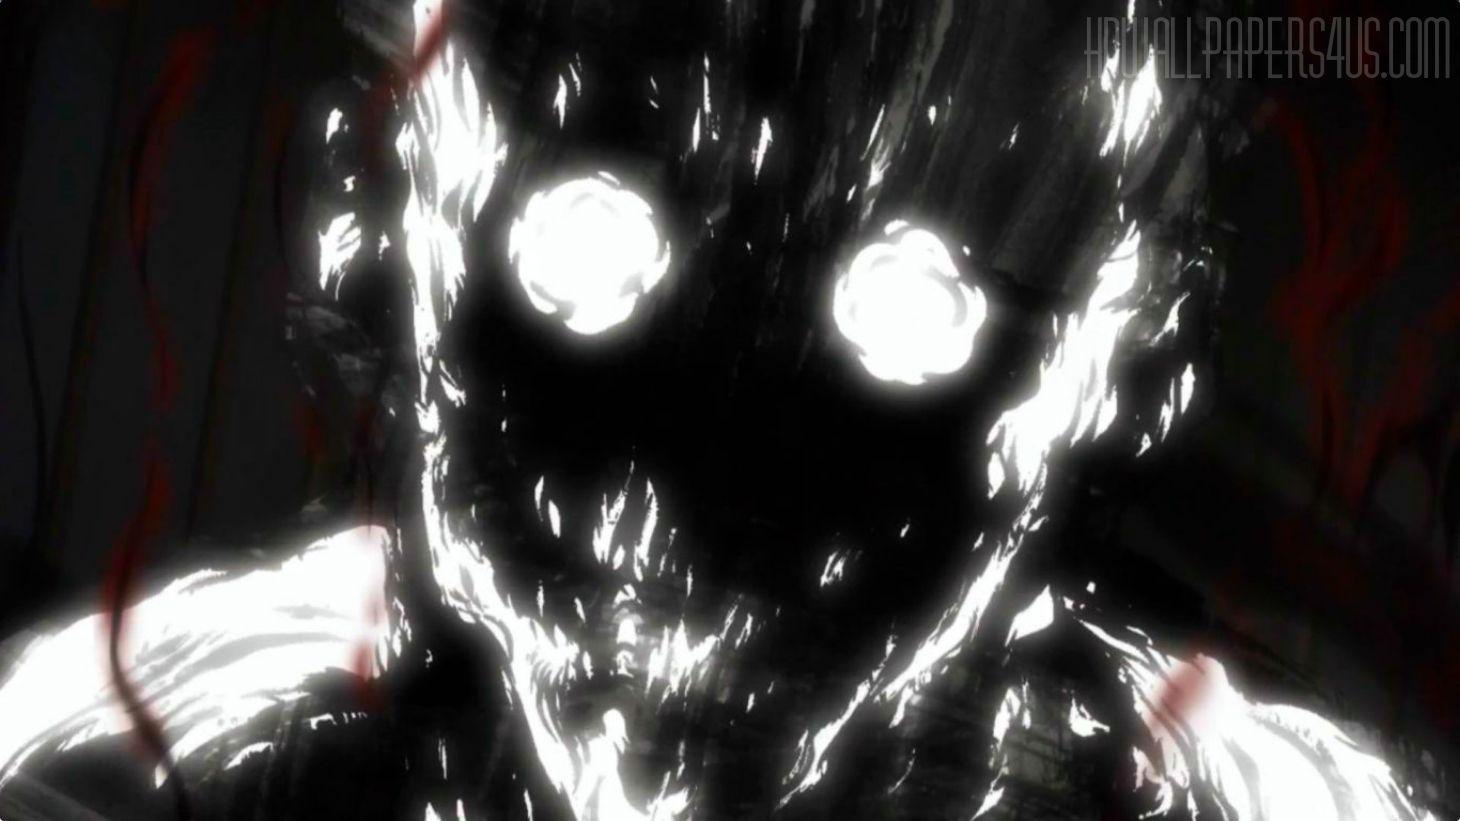 1080p Dark Anime Wallpapers - Wallpaper Cave